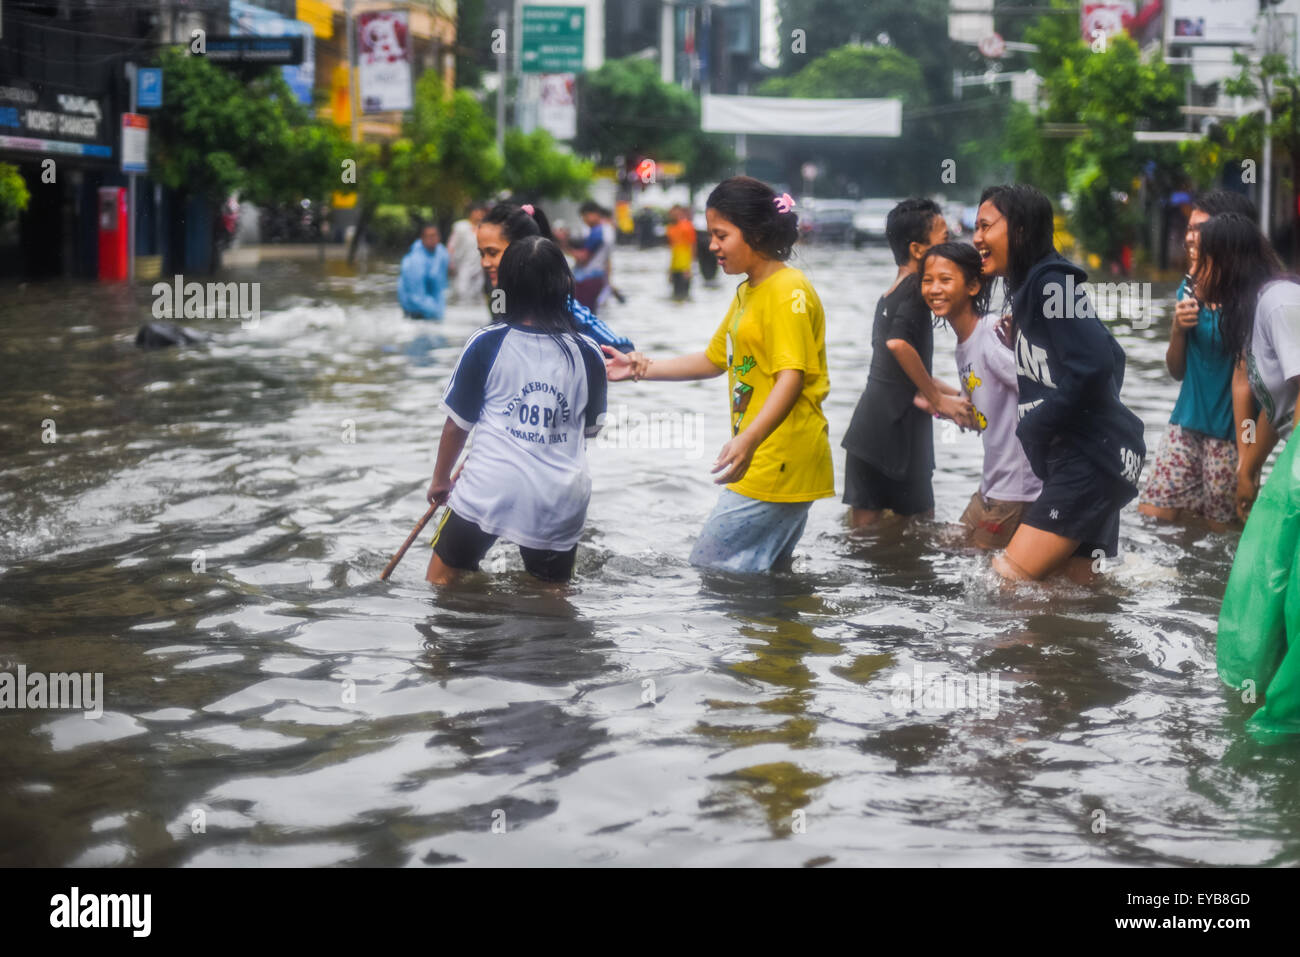 Les adolescents traversant la rue inondée avec excitation. Banque D'Images